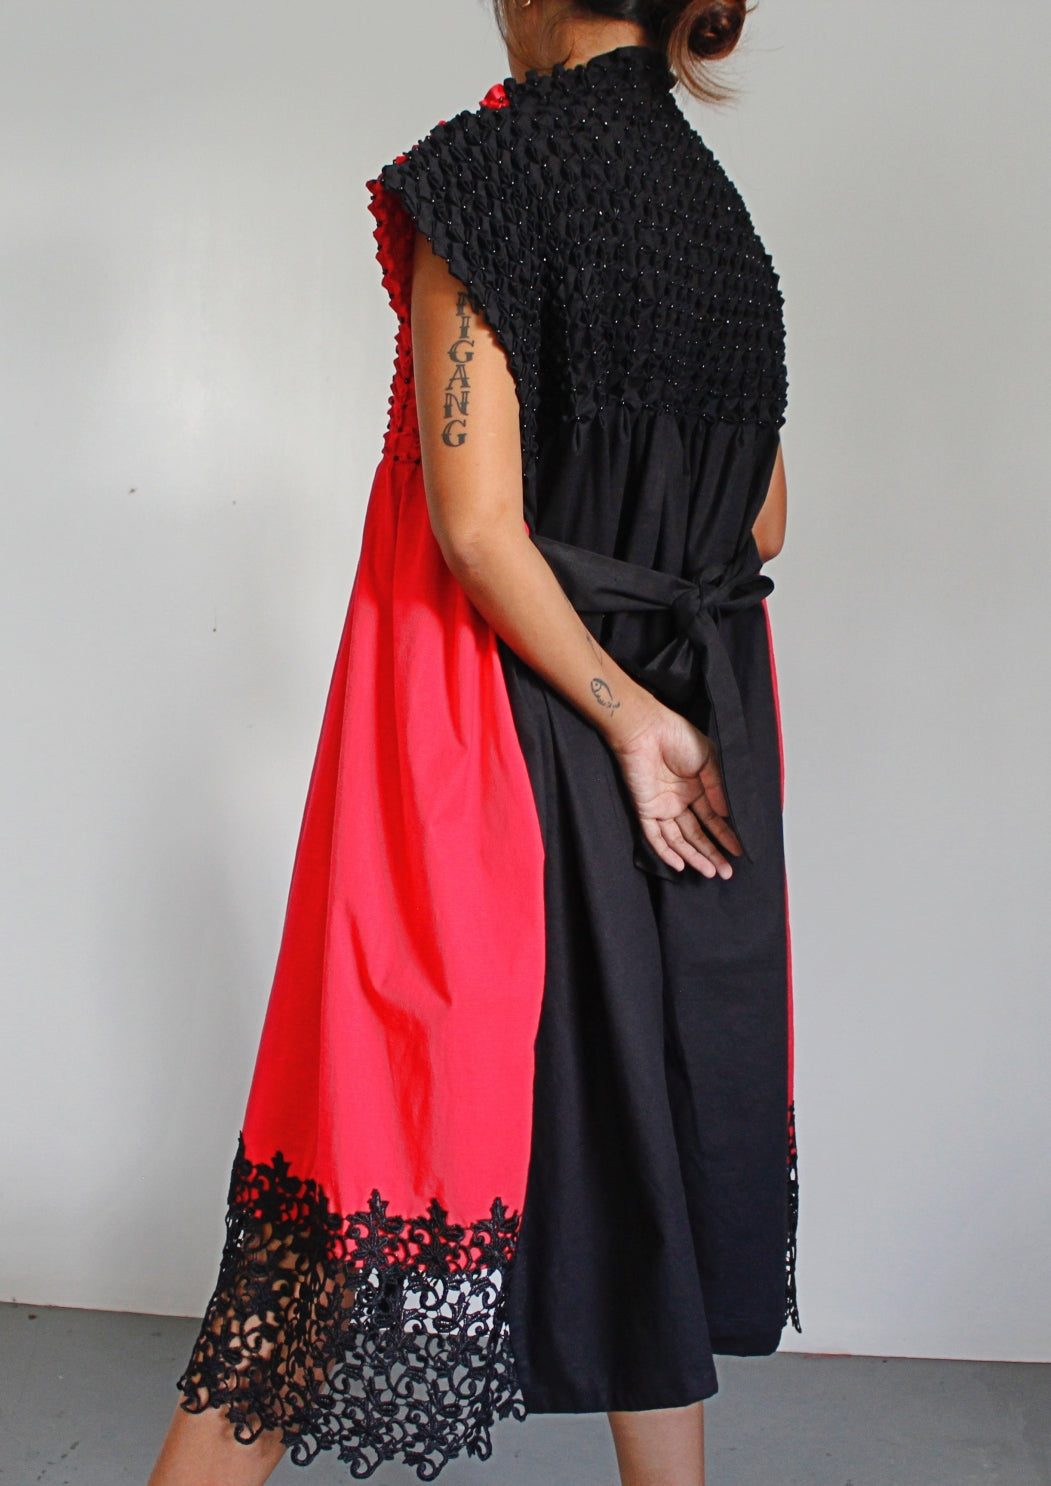 bloom dress - red & black